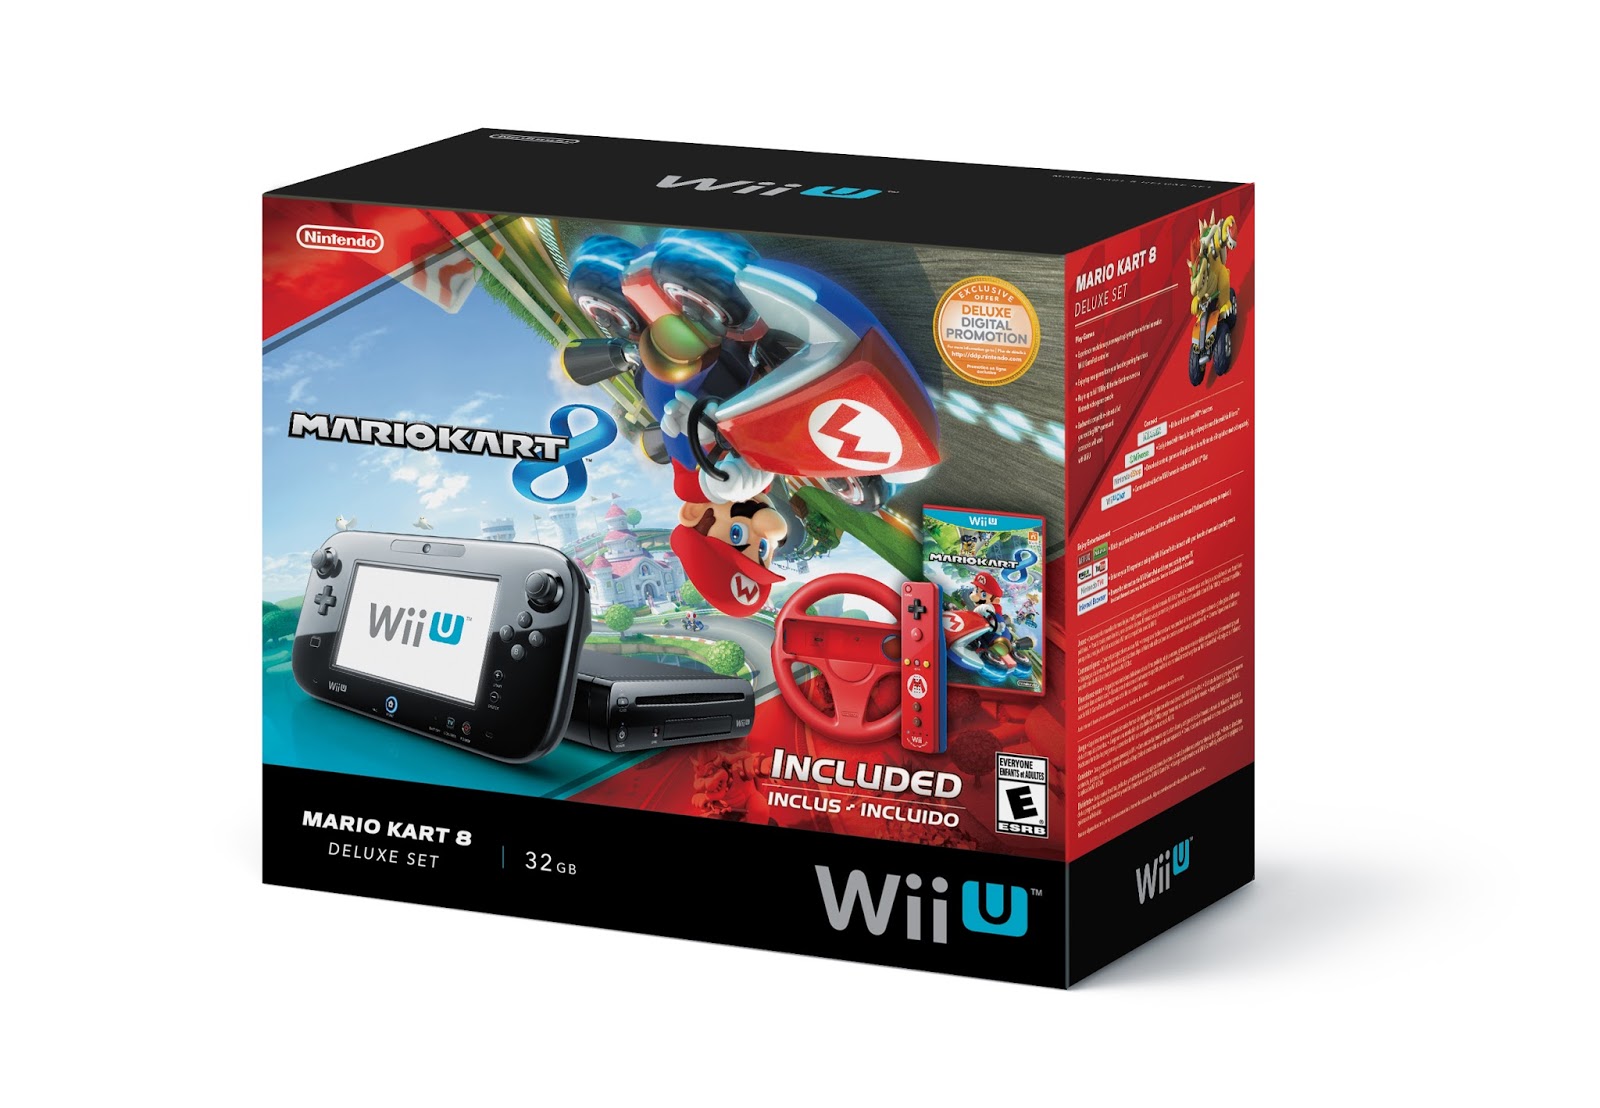 Futuro do Wii U após MK8 Mario+Kart+8+-+Bundle+03